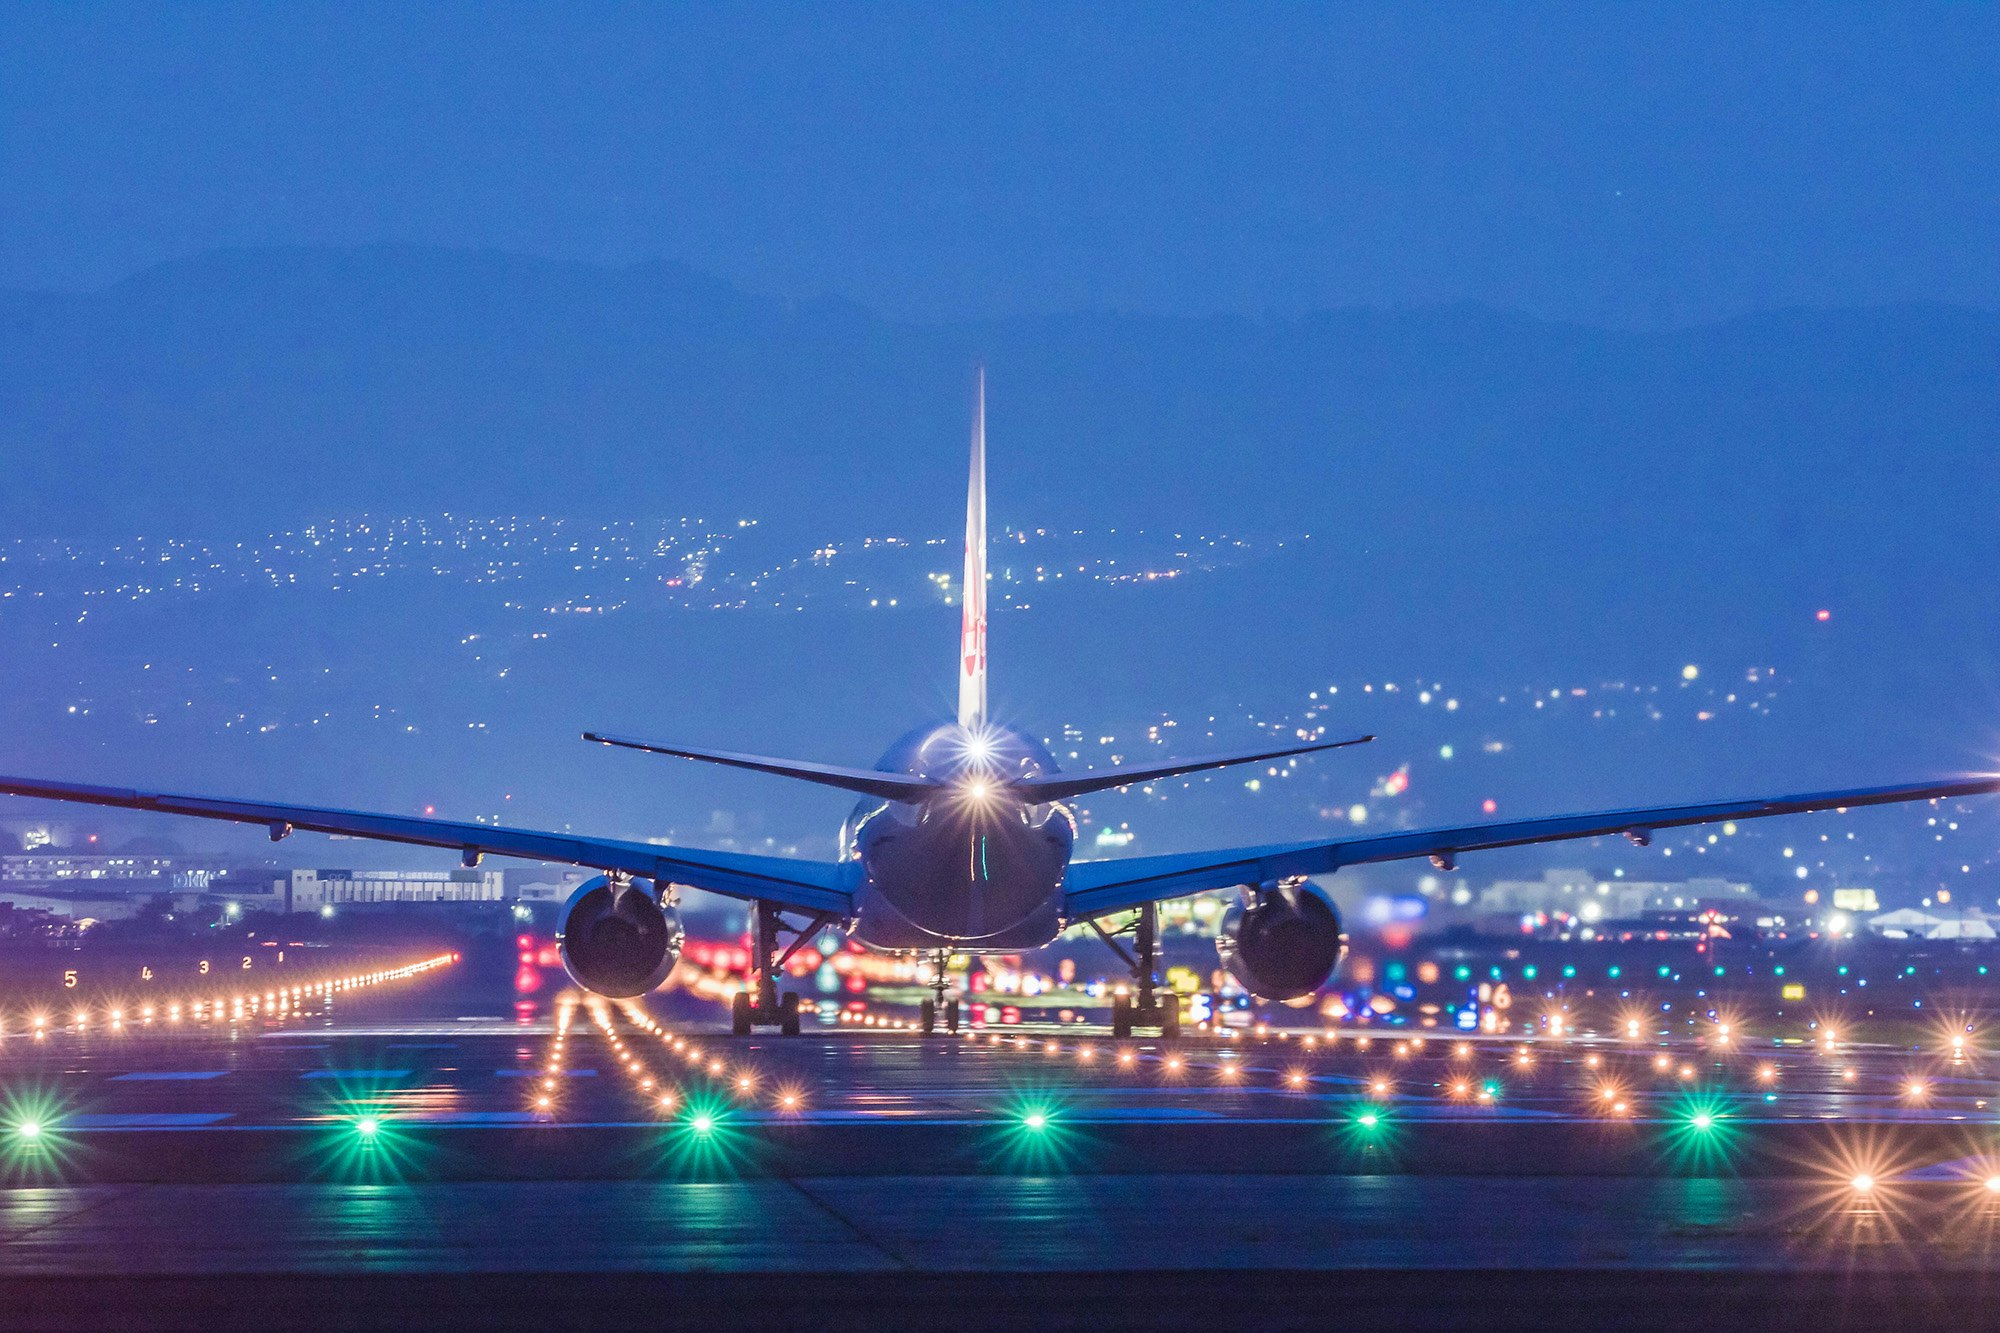 Plane on runway at night